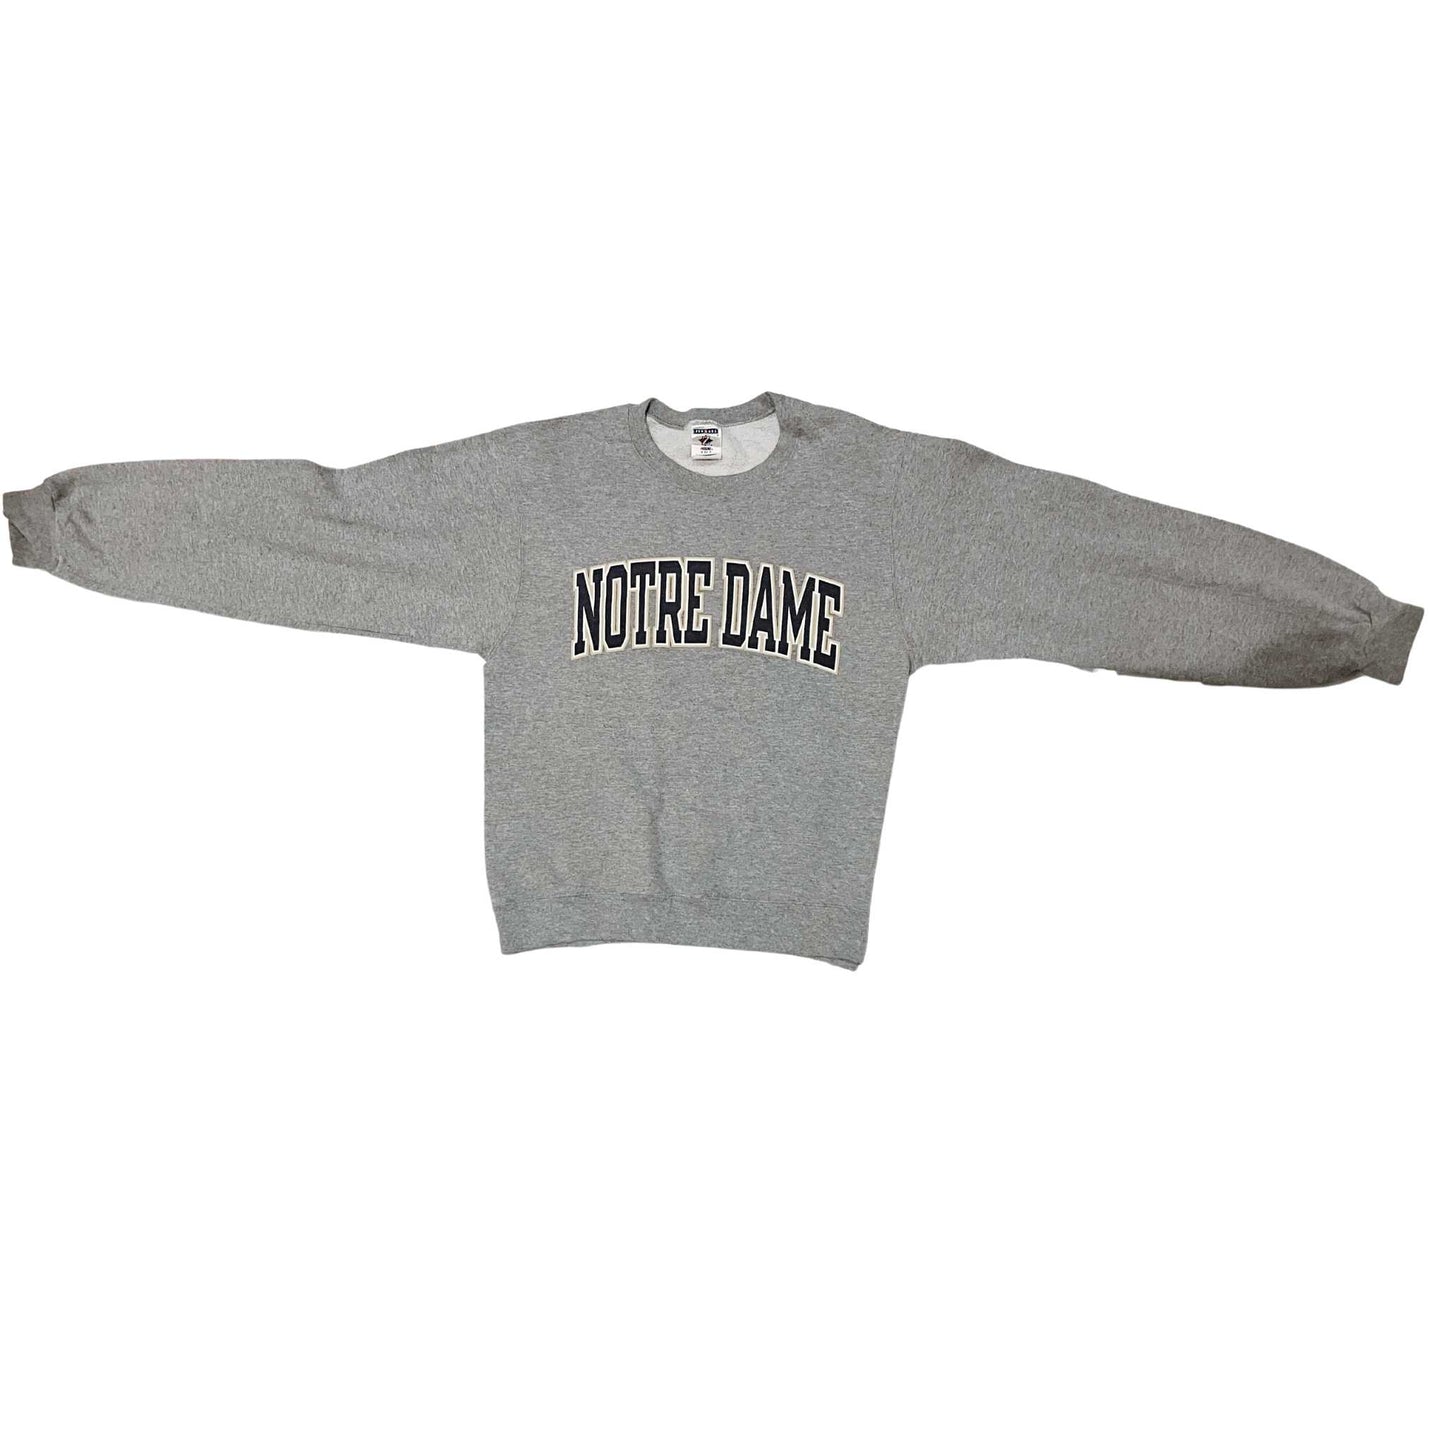 Notre Dame University: Vintage American College Sweatshirt | Size S